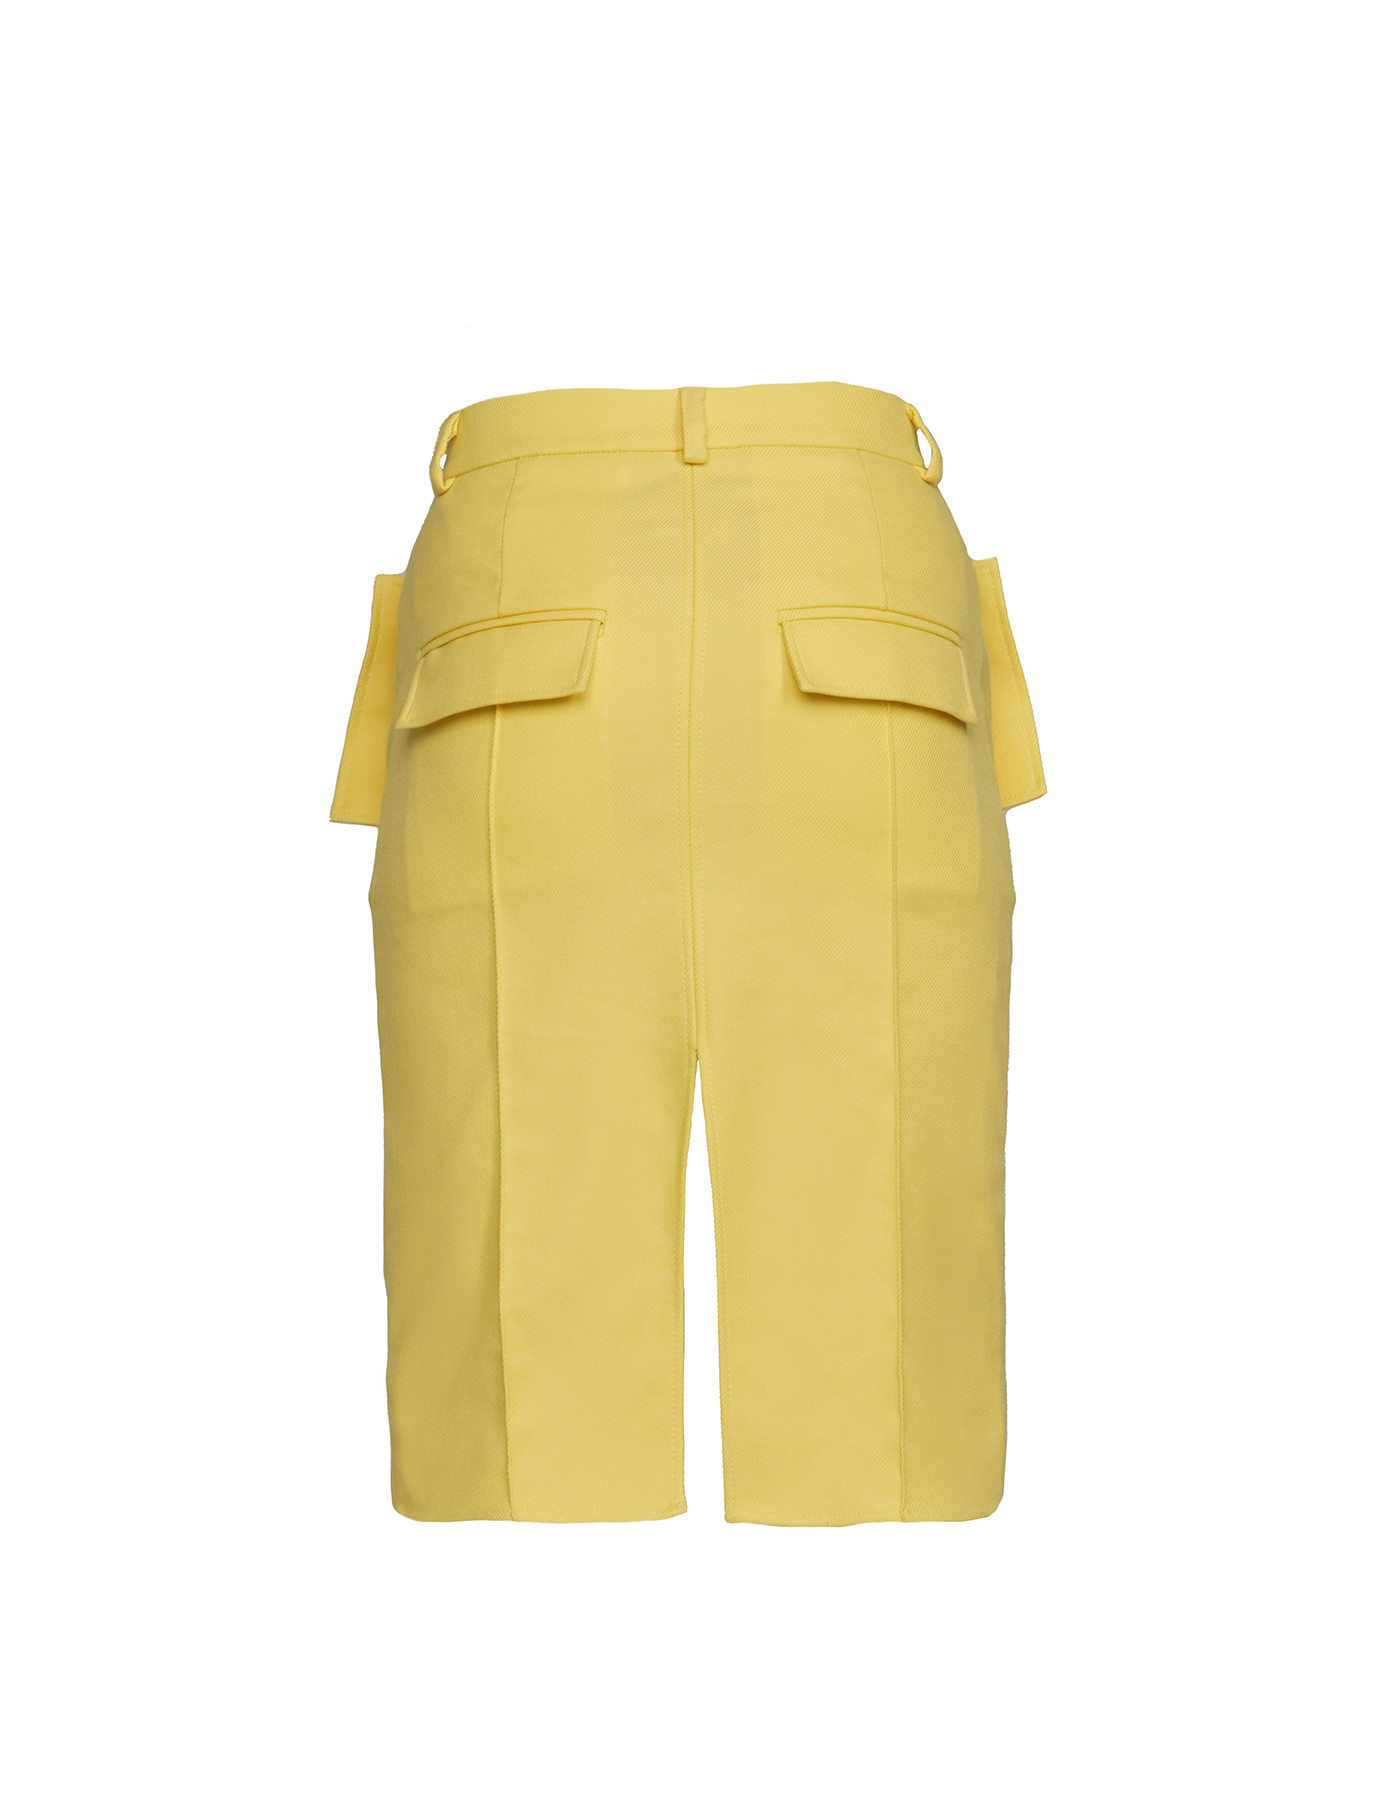 SS22. Yellow skirt 